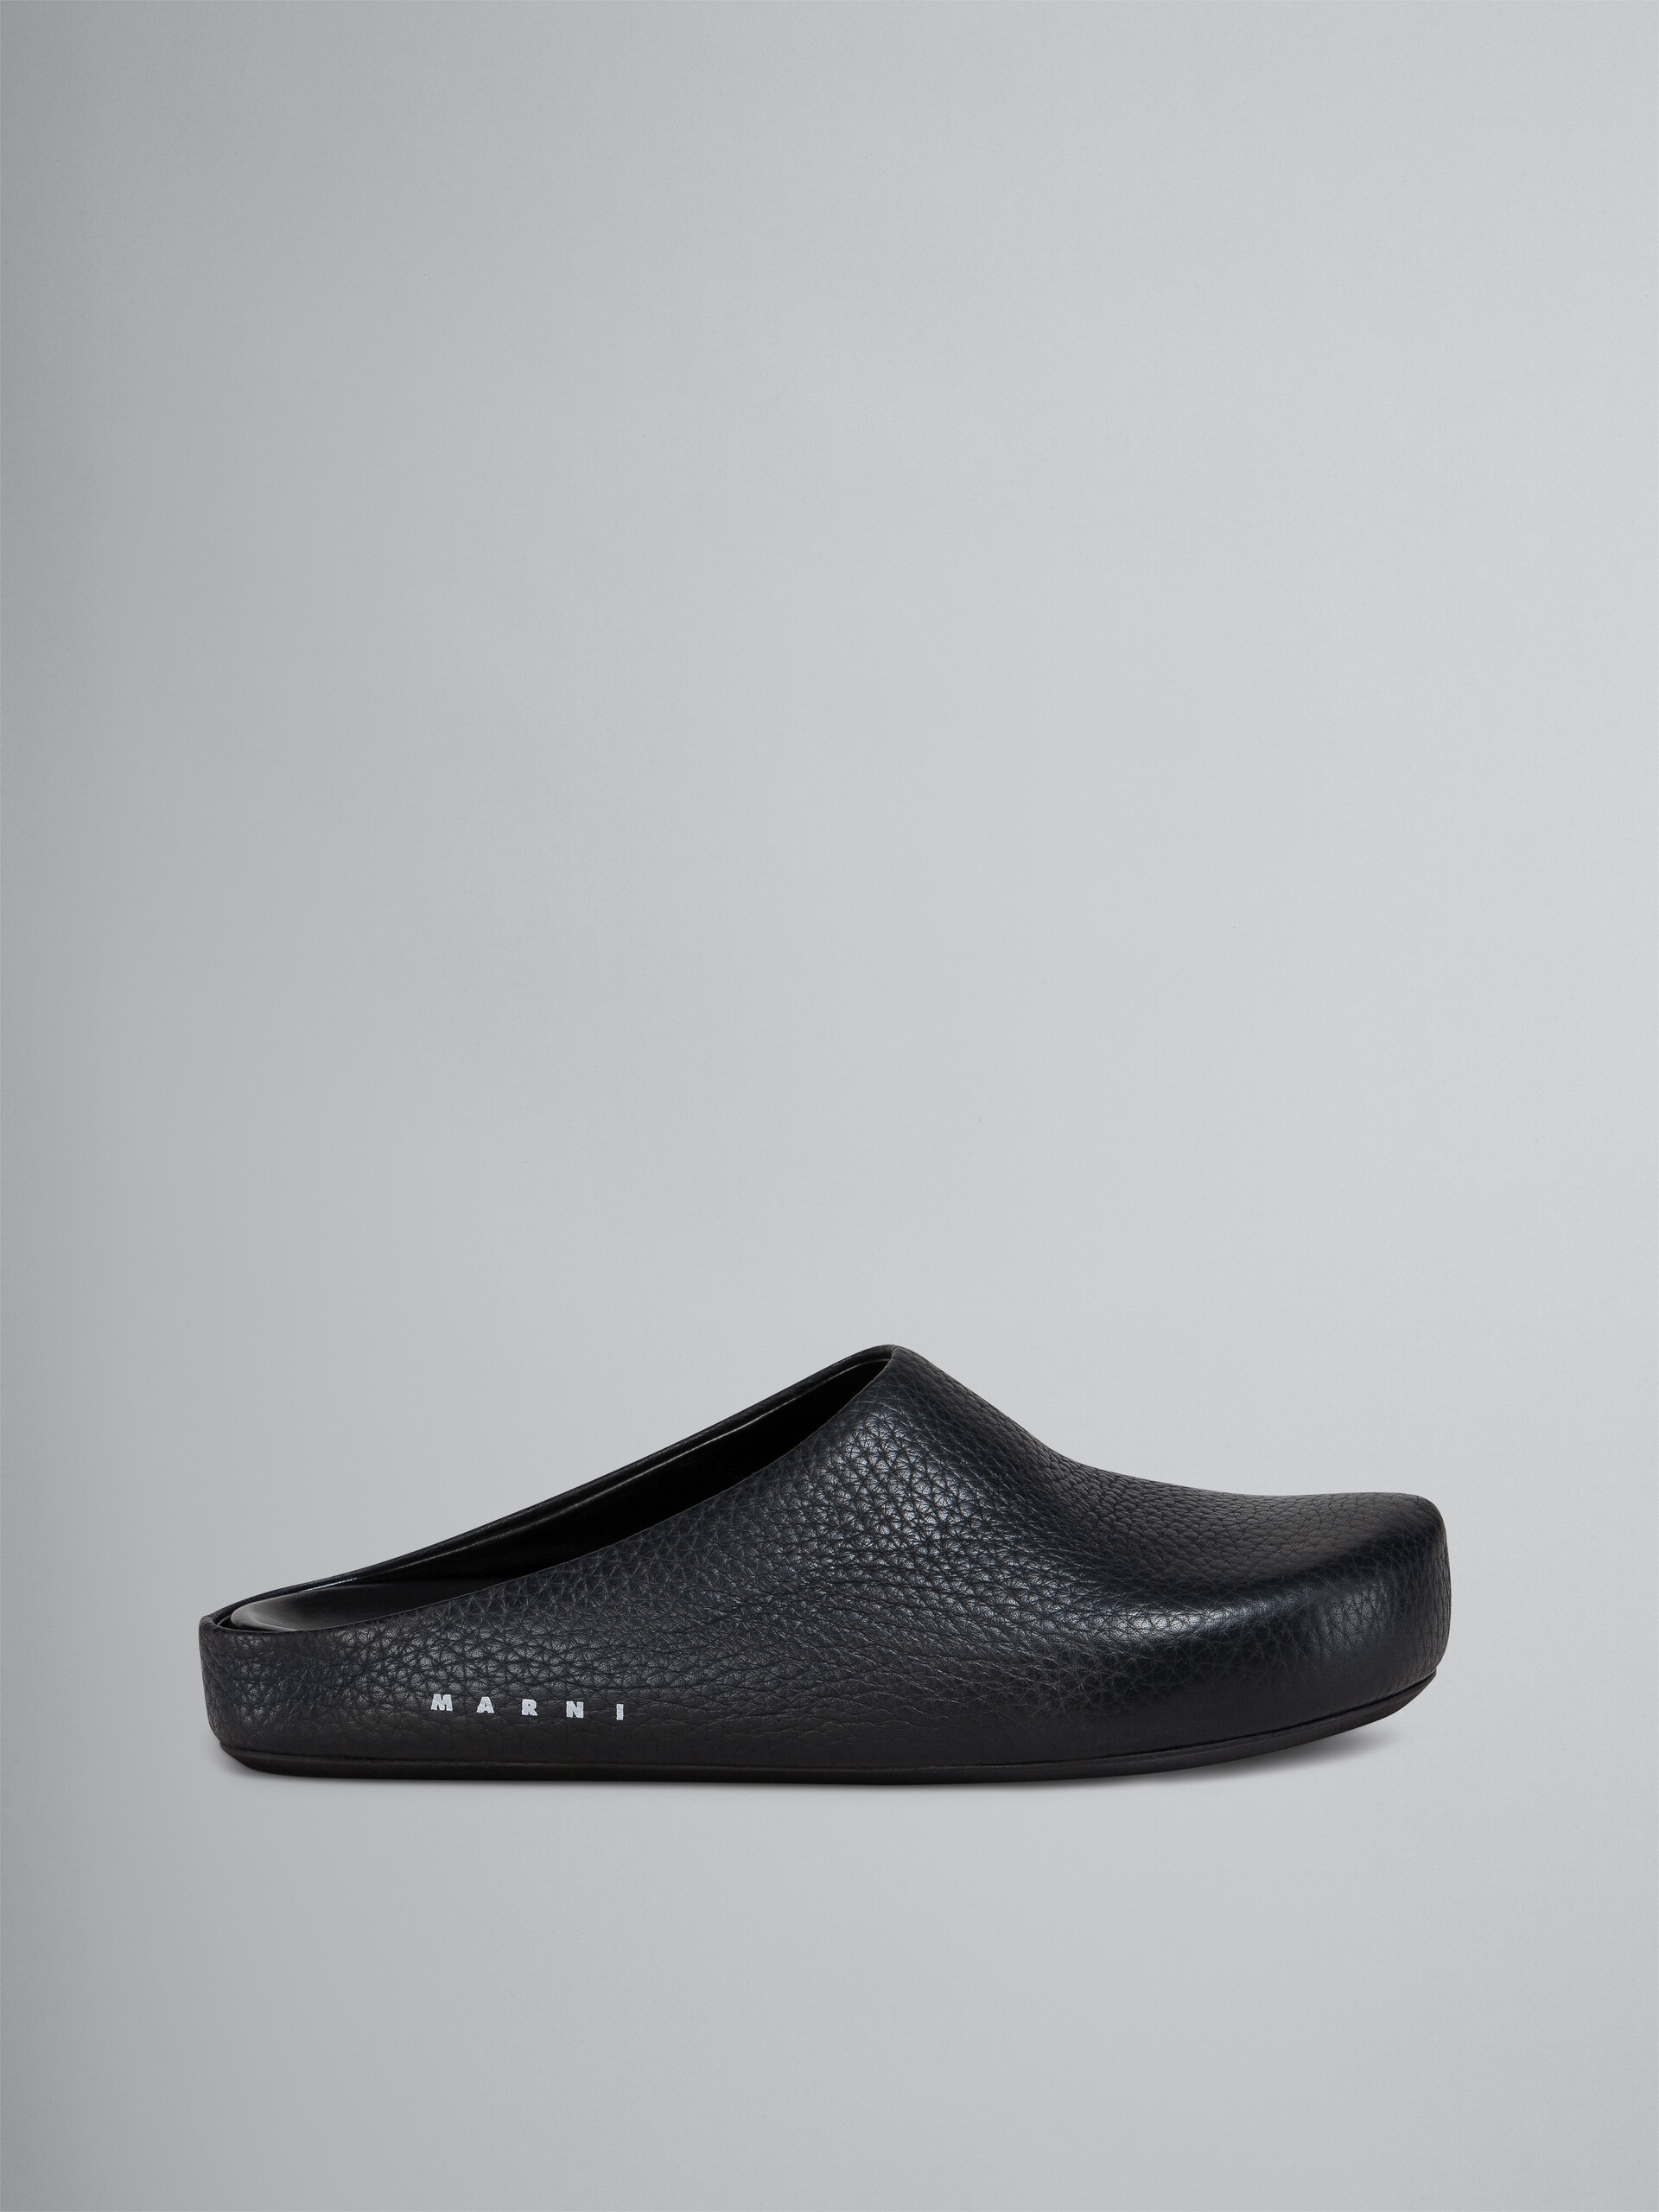 Unisex-Sandale aus schwarzem genarbtem Kalbsleder - Holzschuhe - Image 1